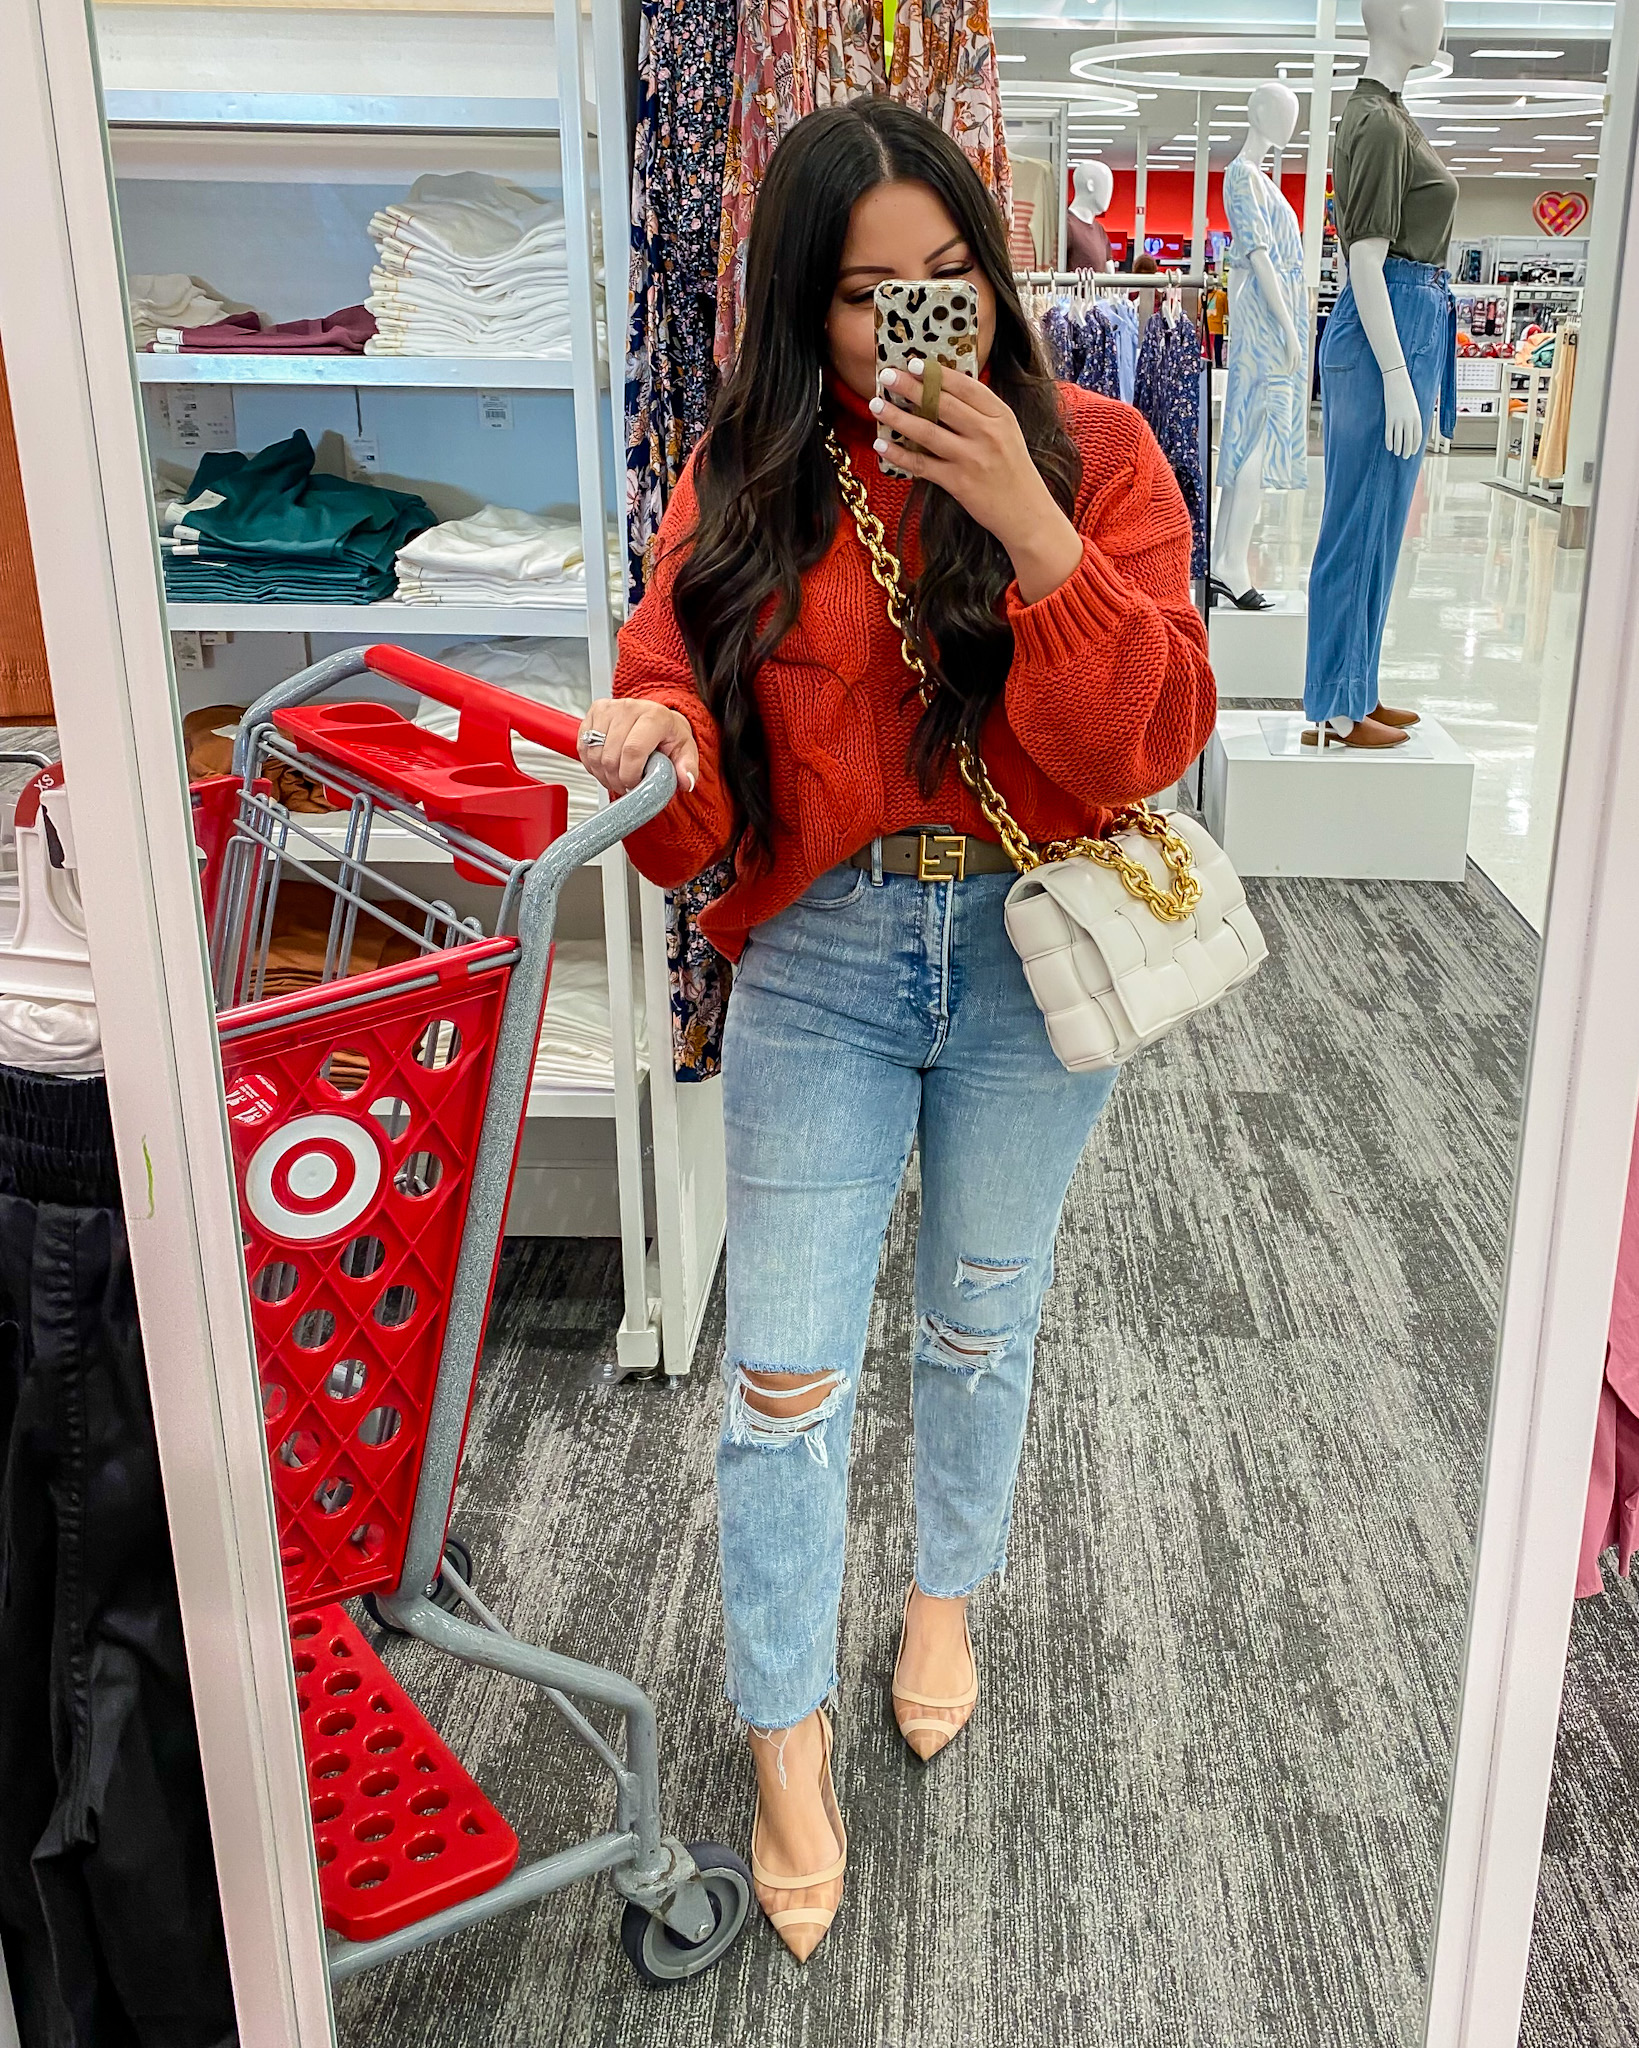 Houston fashion/lifestyle blogger LuxMommy browsing Target.